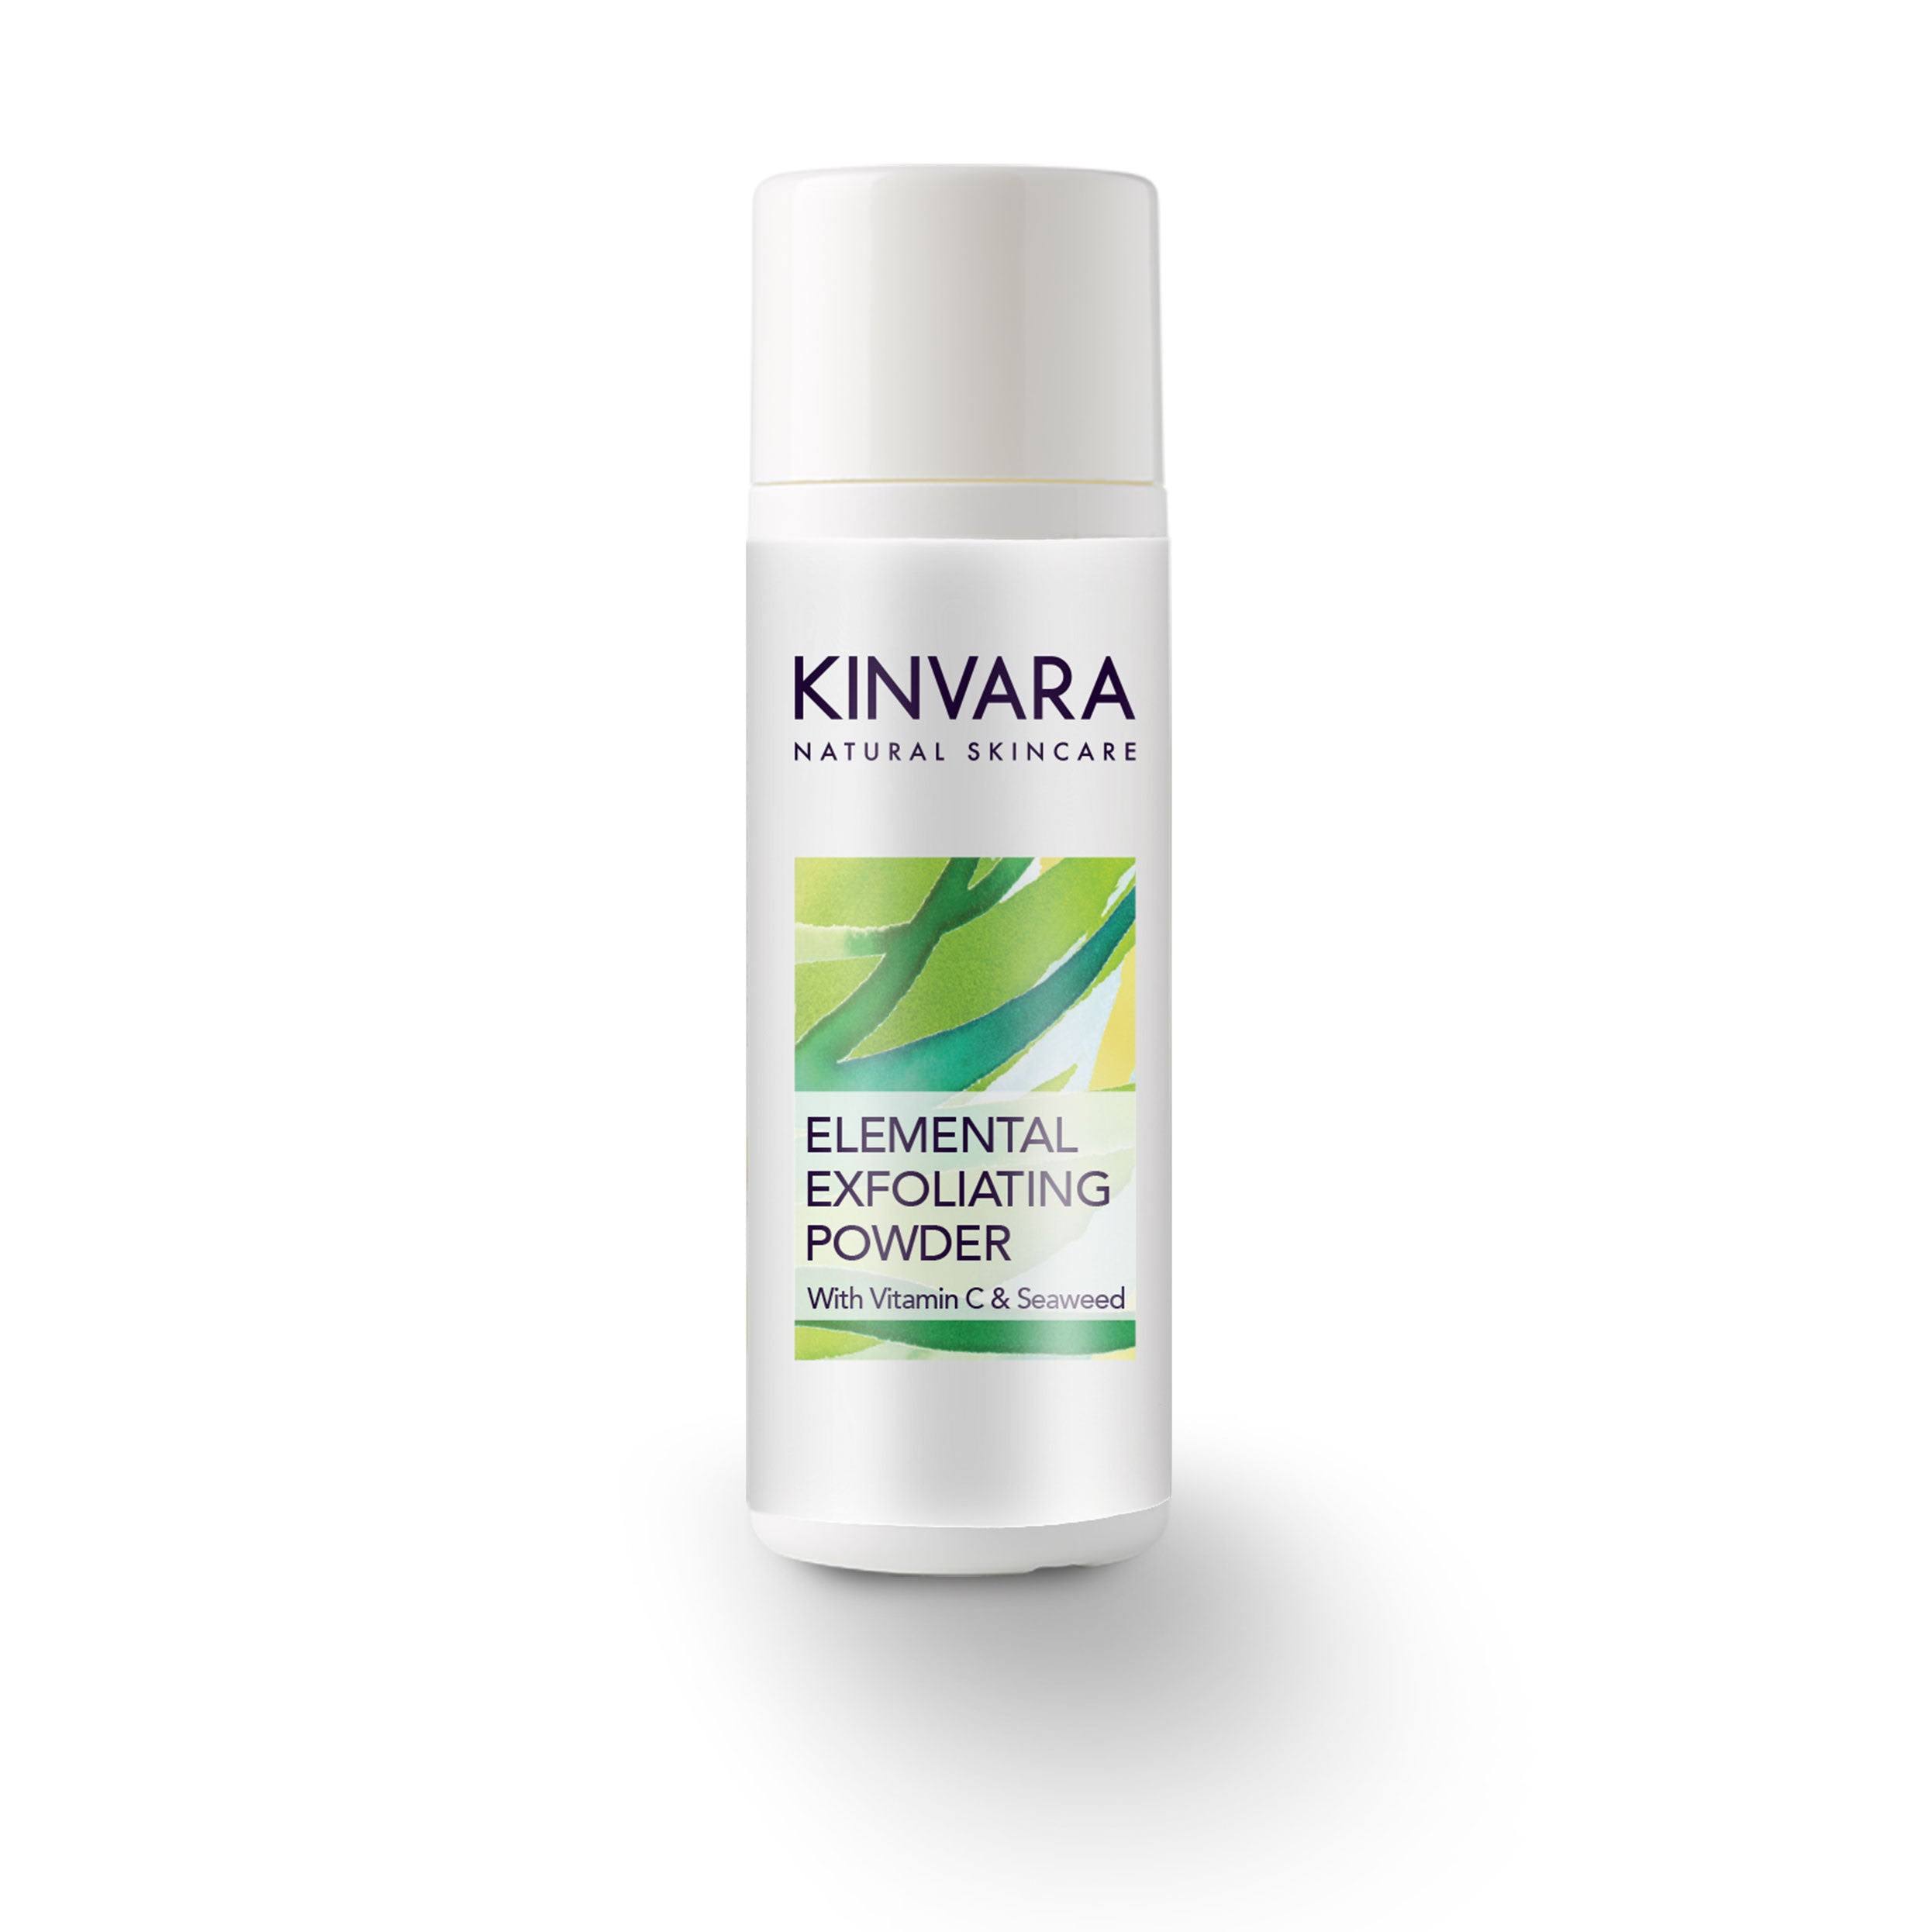 Kinvara Elemental Exfoliating Powder - 20g